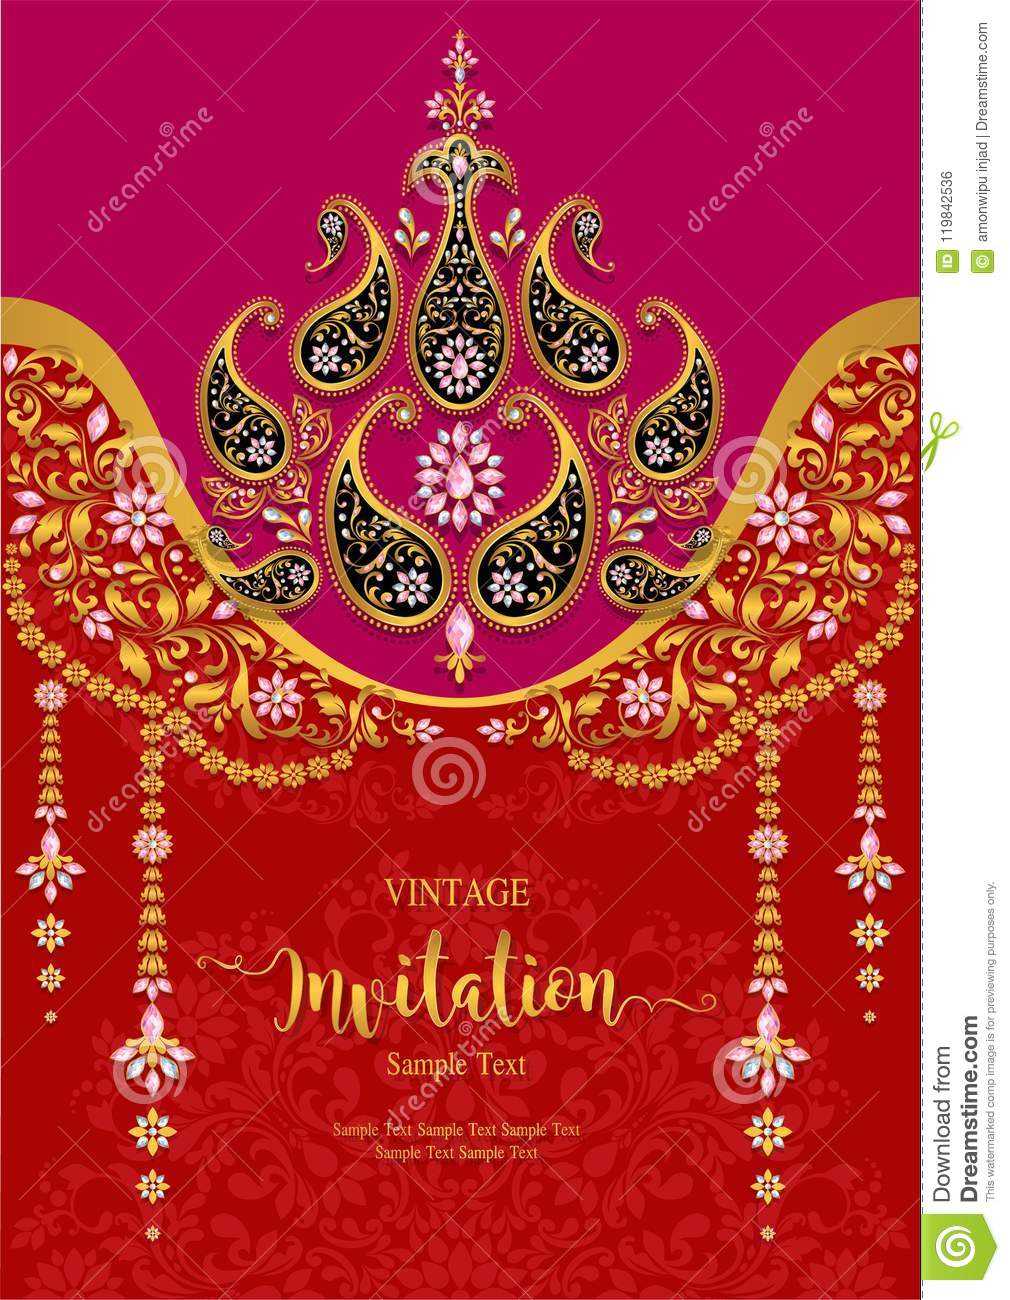 Wedding Invitation Card Templates . Stock Vector In Indian Wedding Cards Design Templates